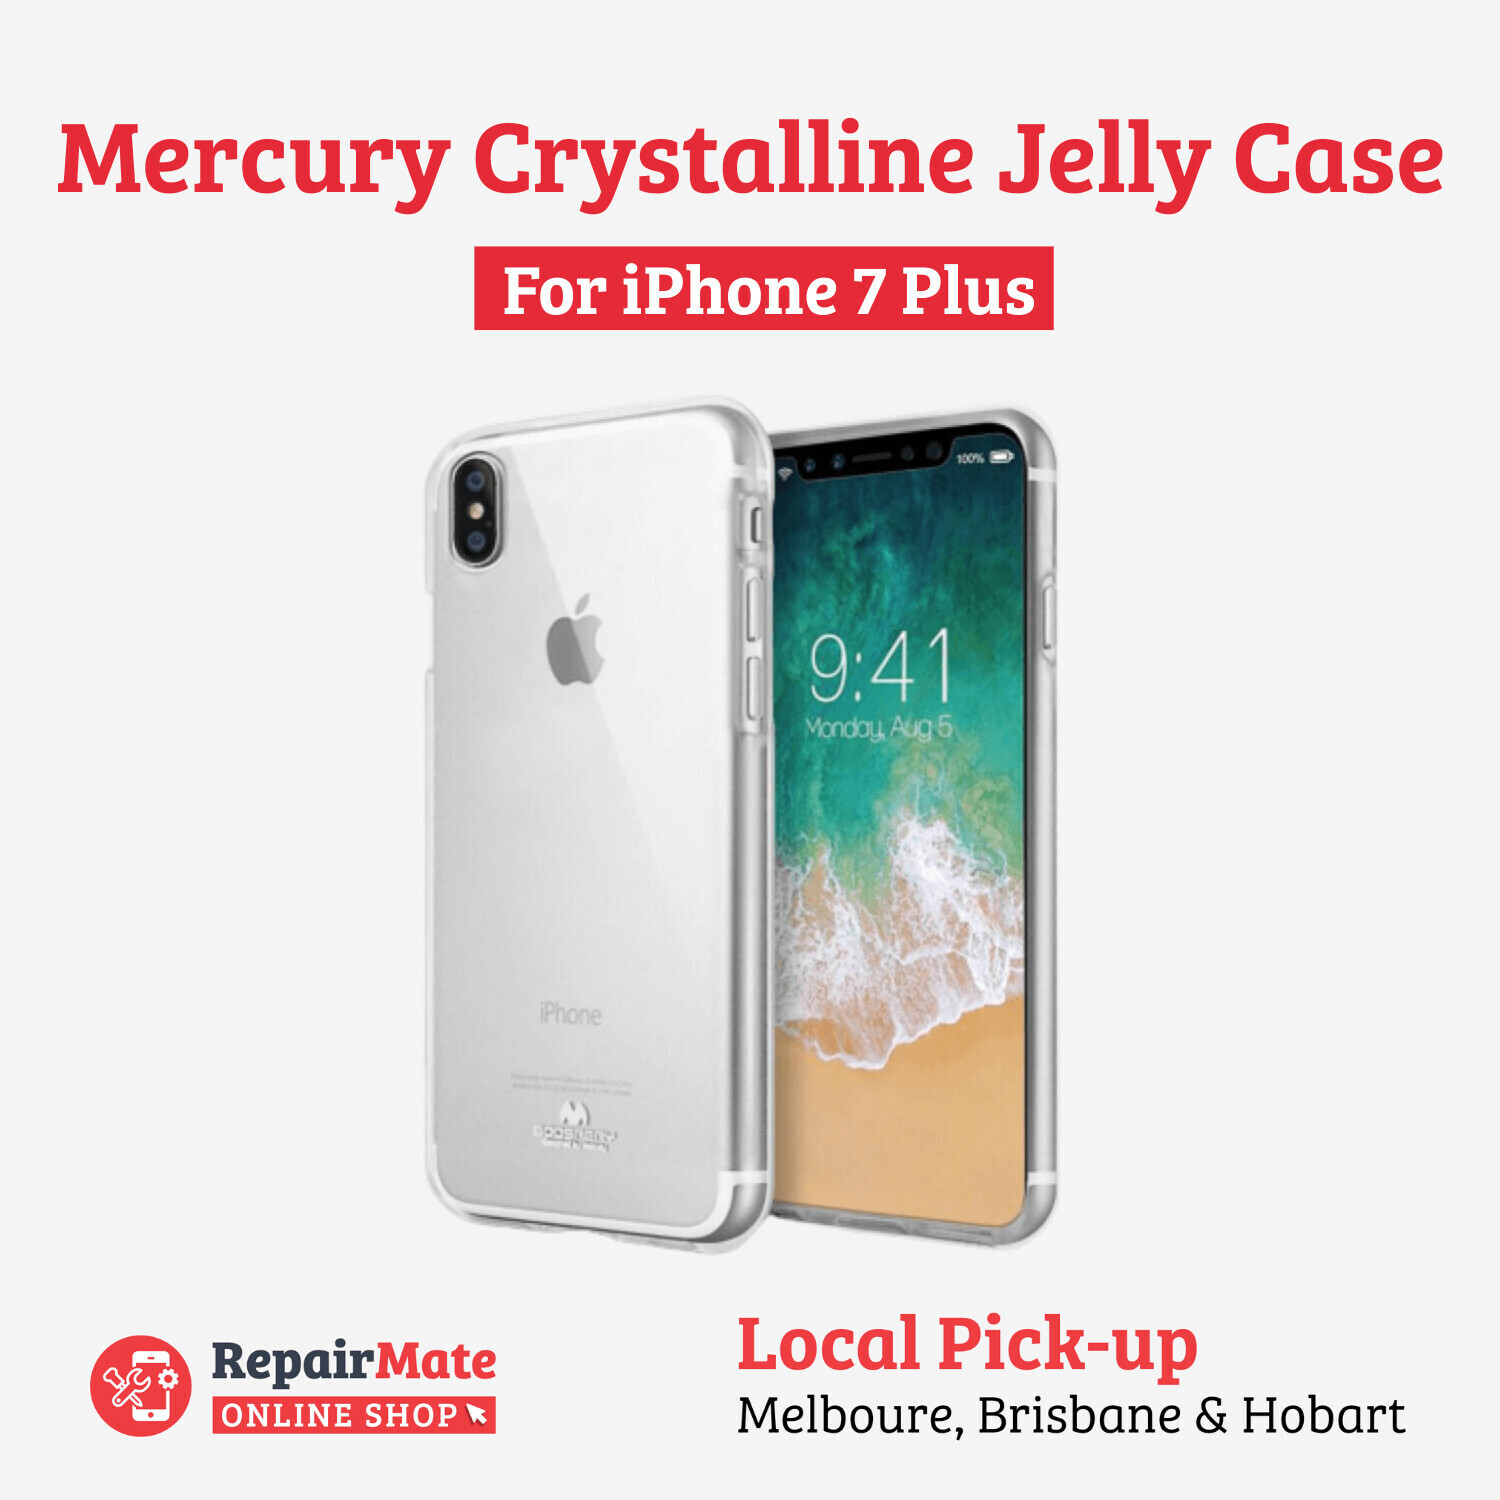 iPhone 7 Plus Mercury Crystalline Jelly Case Cover